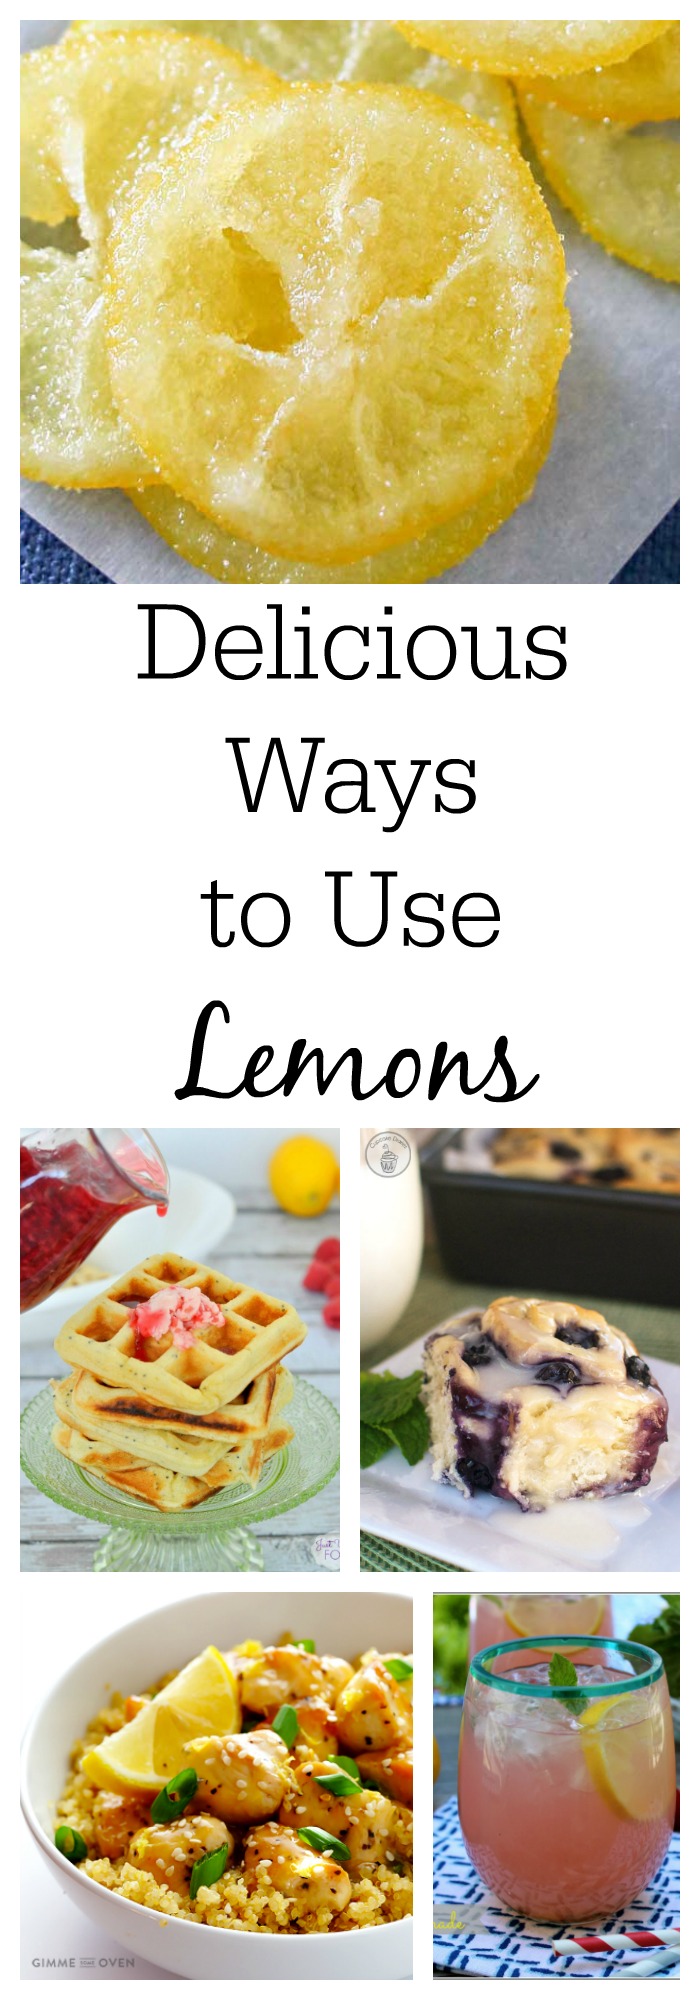 17 Delicious Ways to Use Lemons